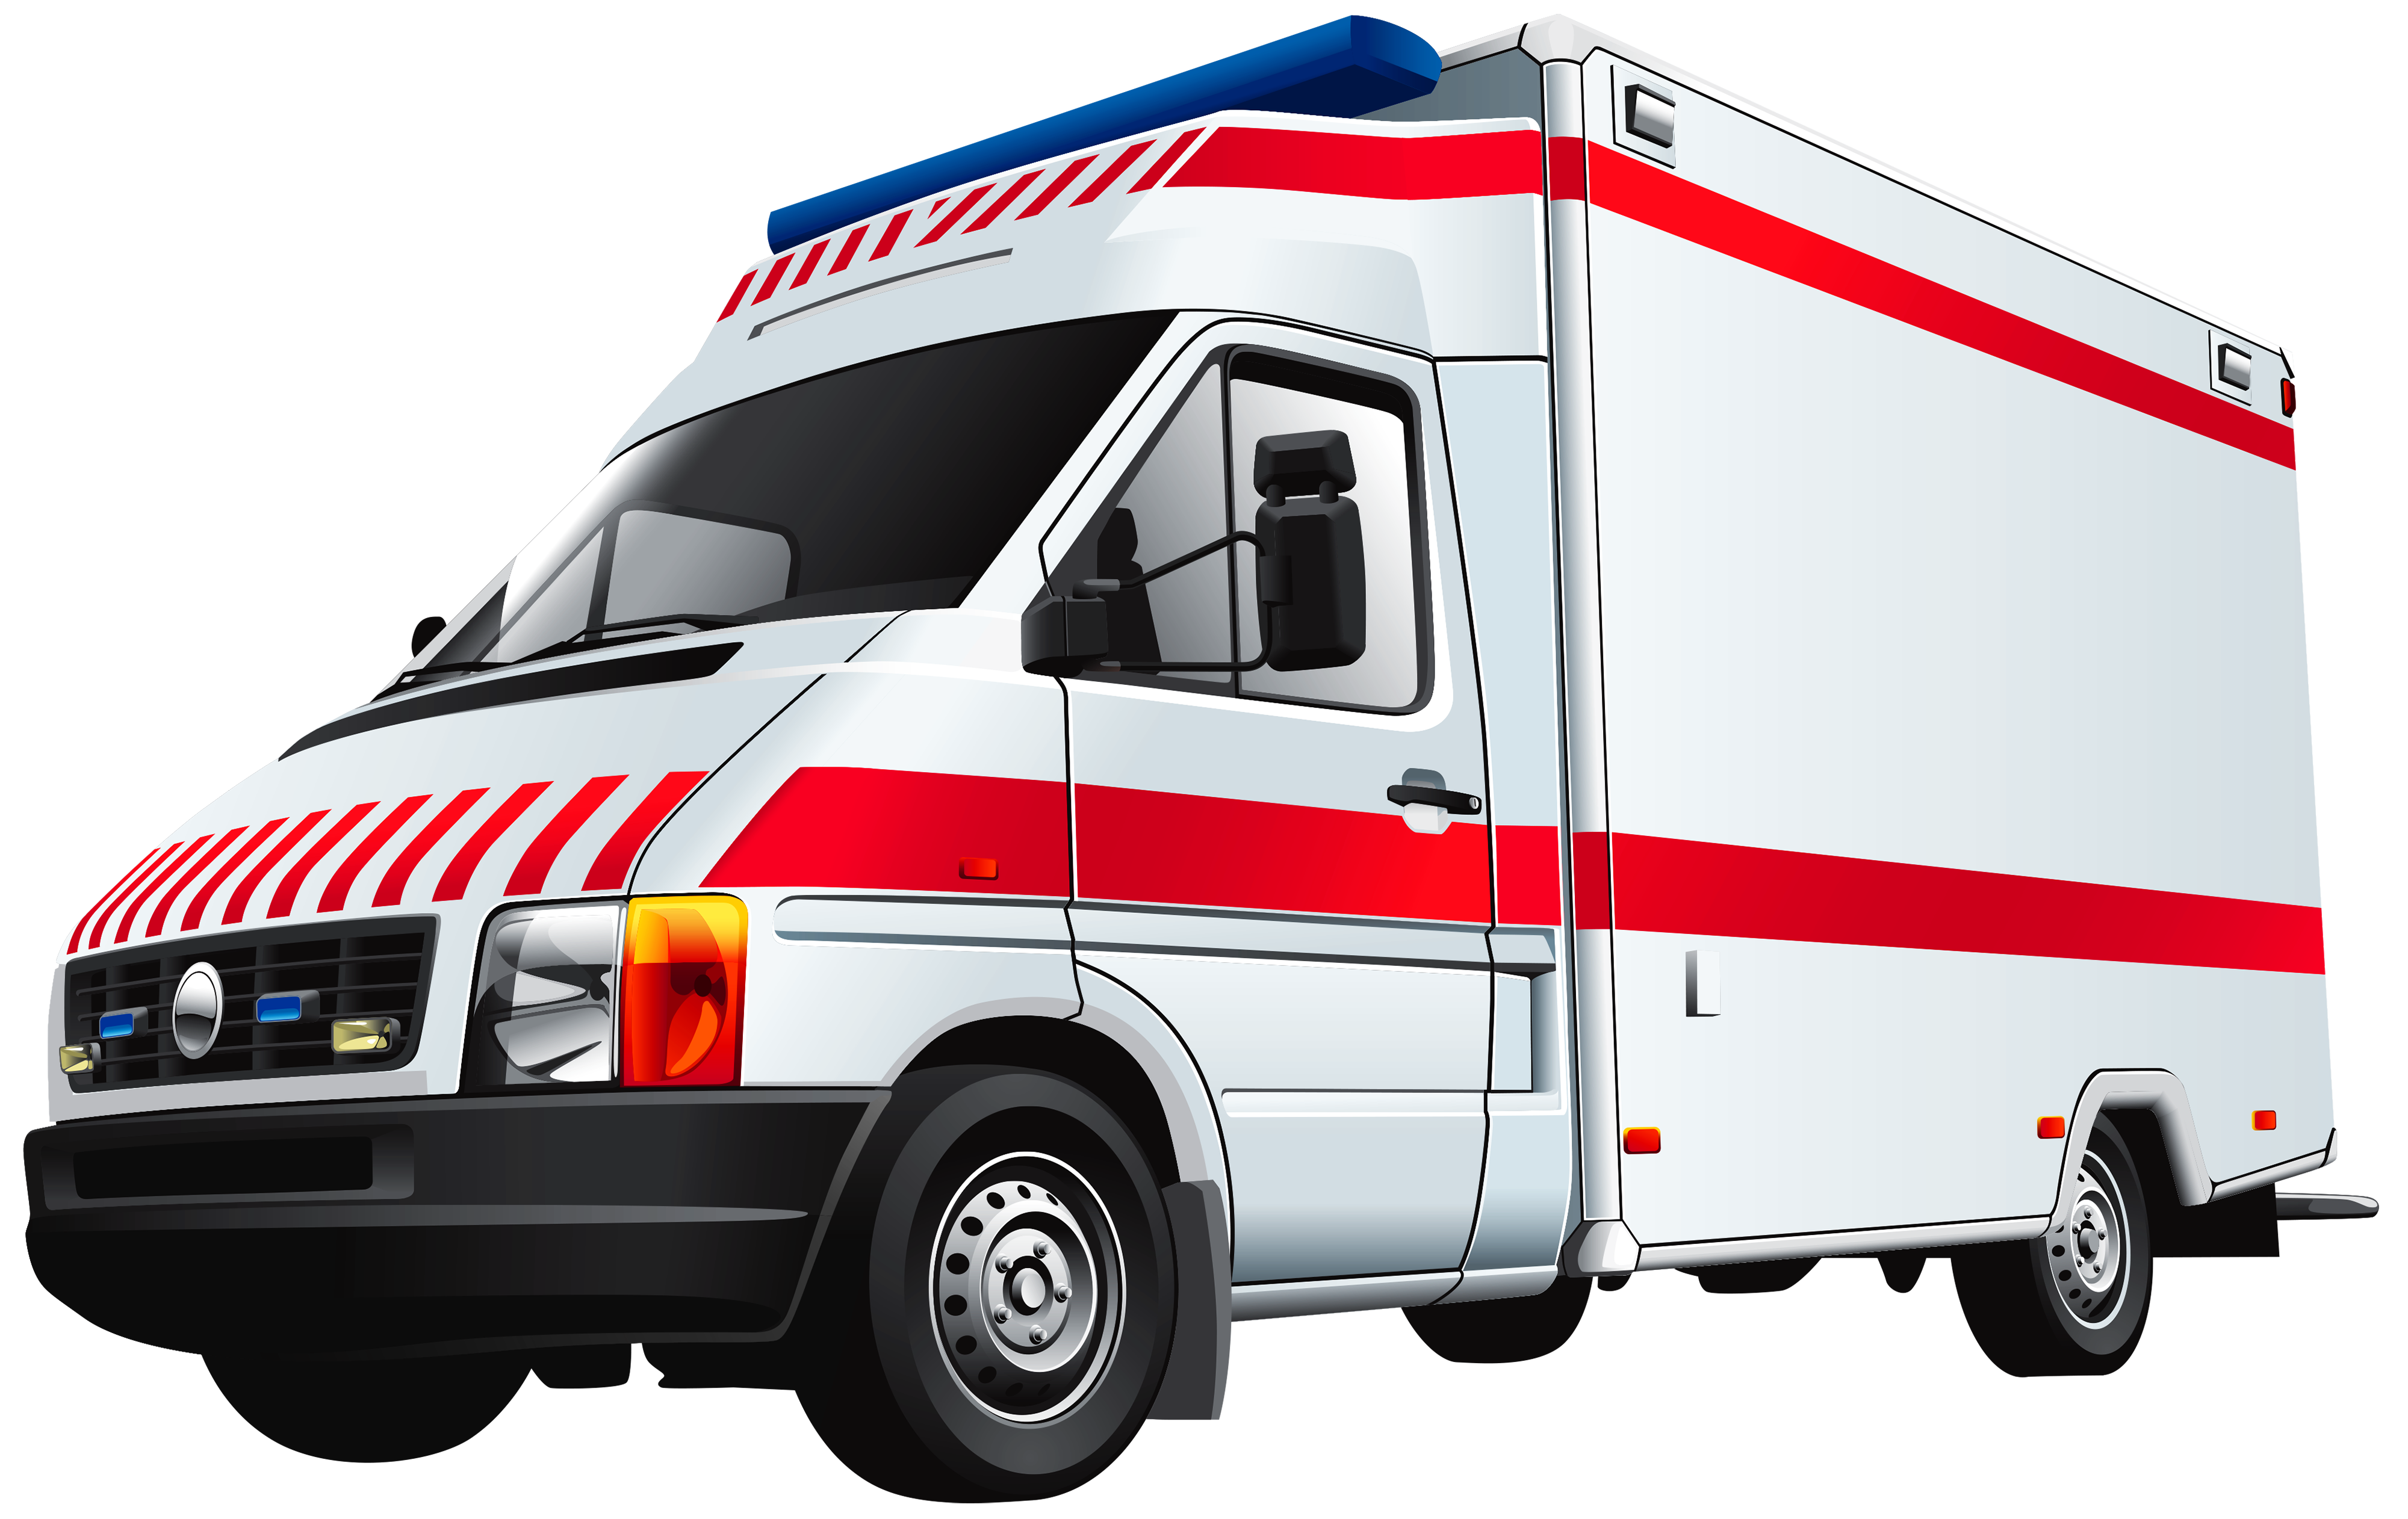 transportation clipart emergency vehicle